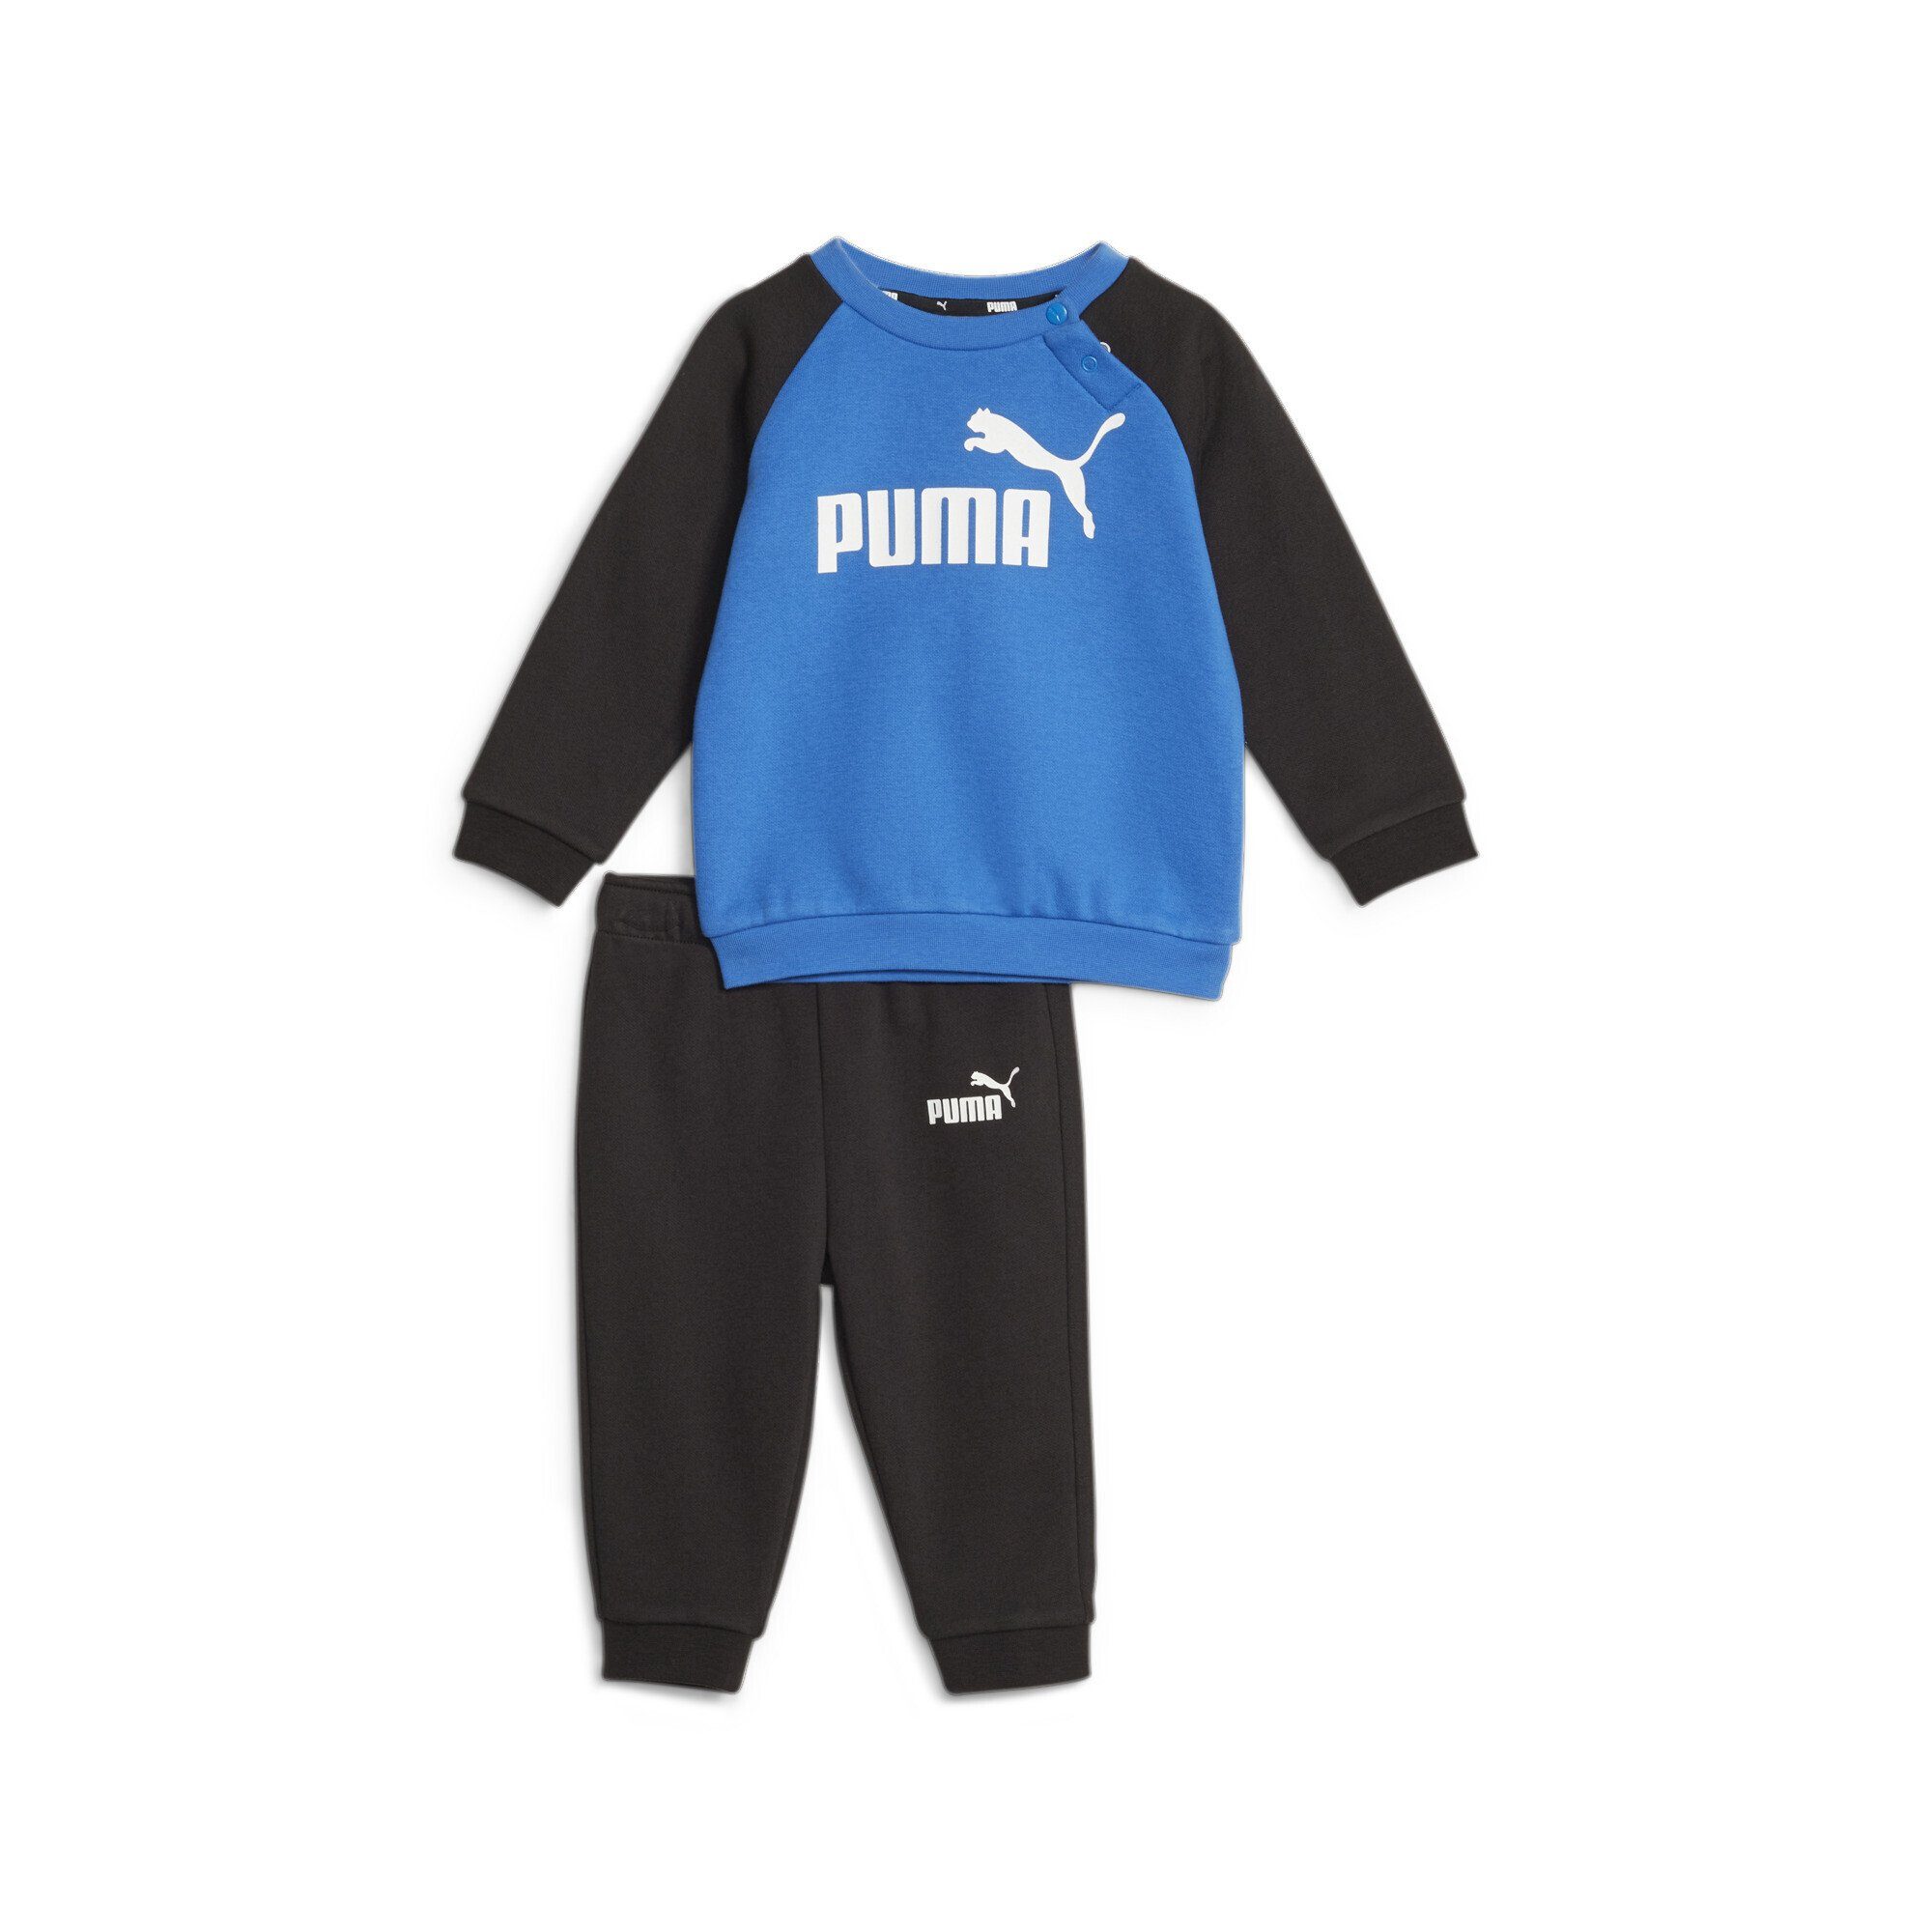 PUMA Jogginganzug Minicats Joggingset Raglanärmeln Racing Blue Essentials mit Kinder